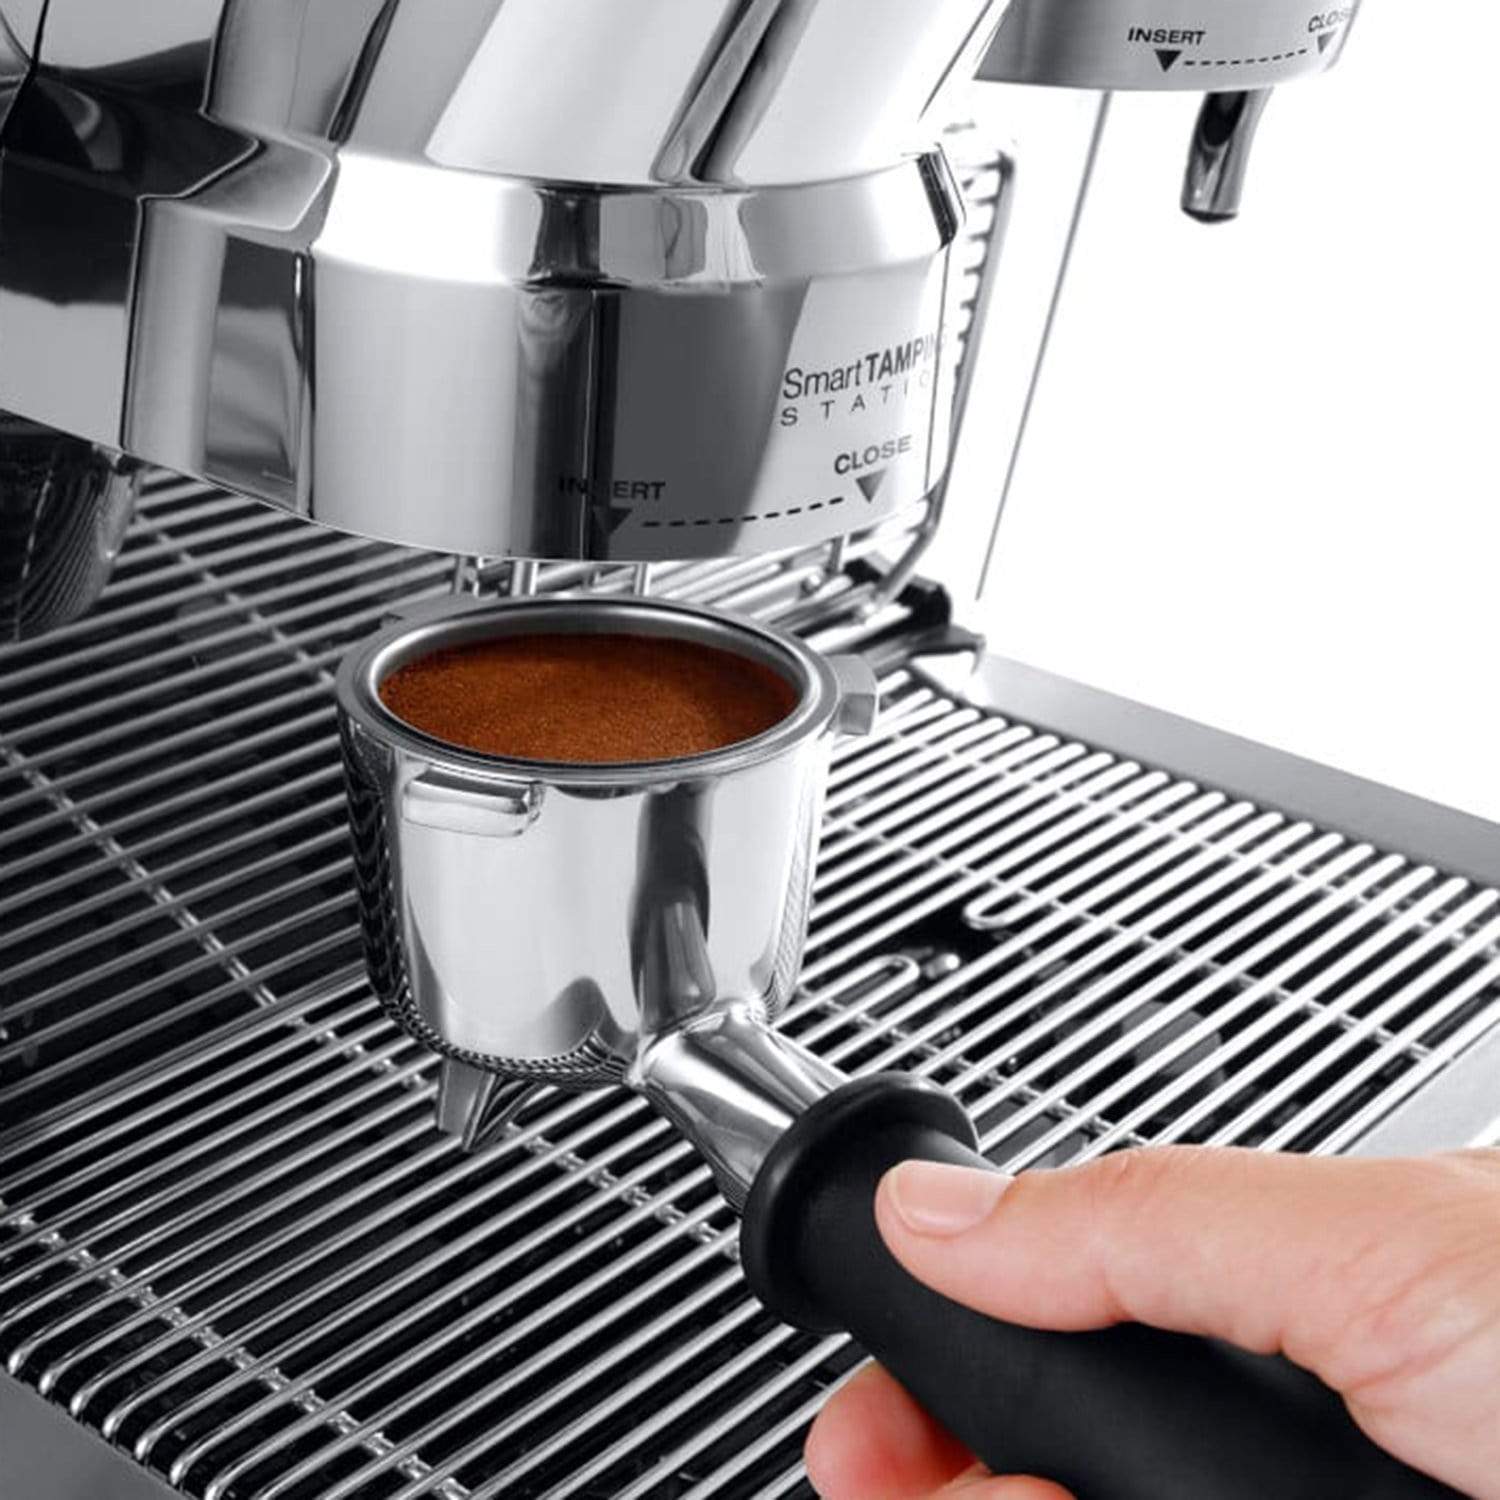 De'Longhi ماكينة تحضير القهوة بمضخة لا سبيشاليكا - فضي - EC9335. م - جاشنمال هوم